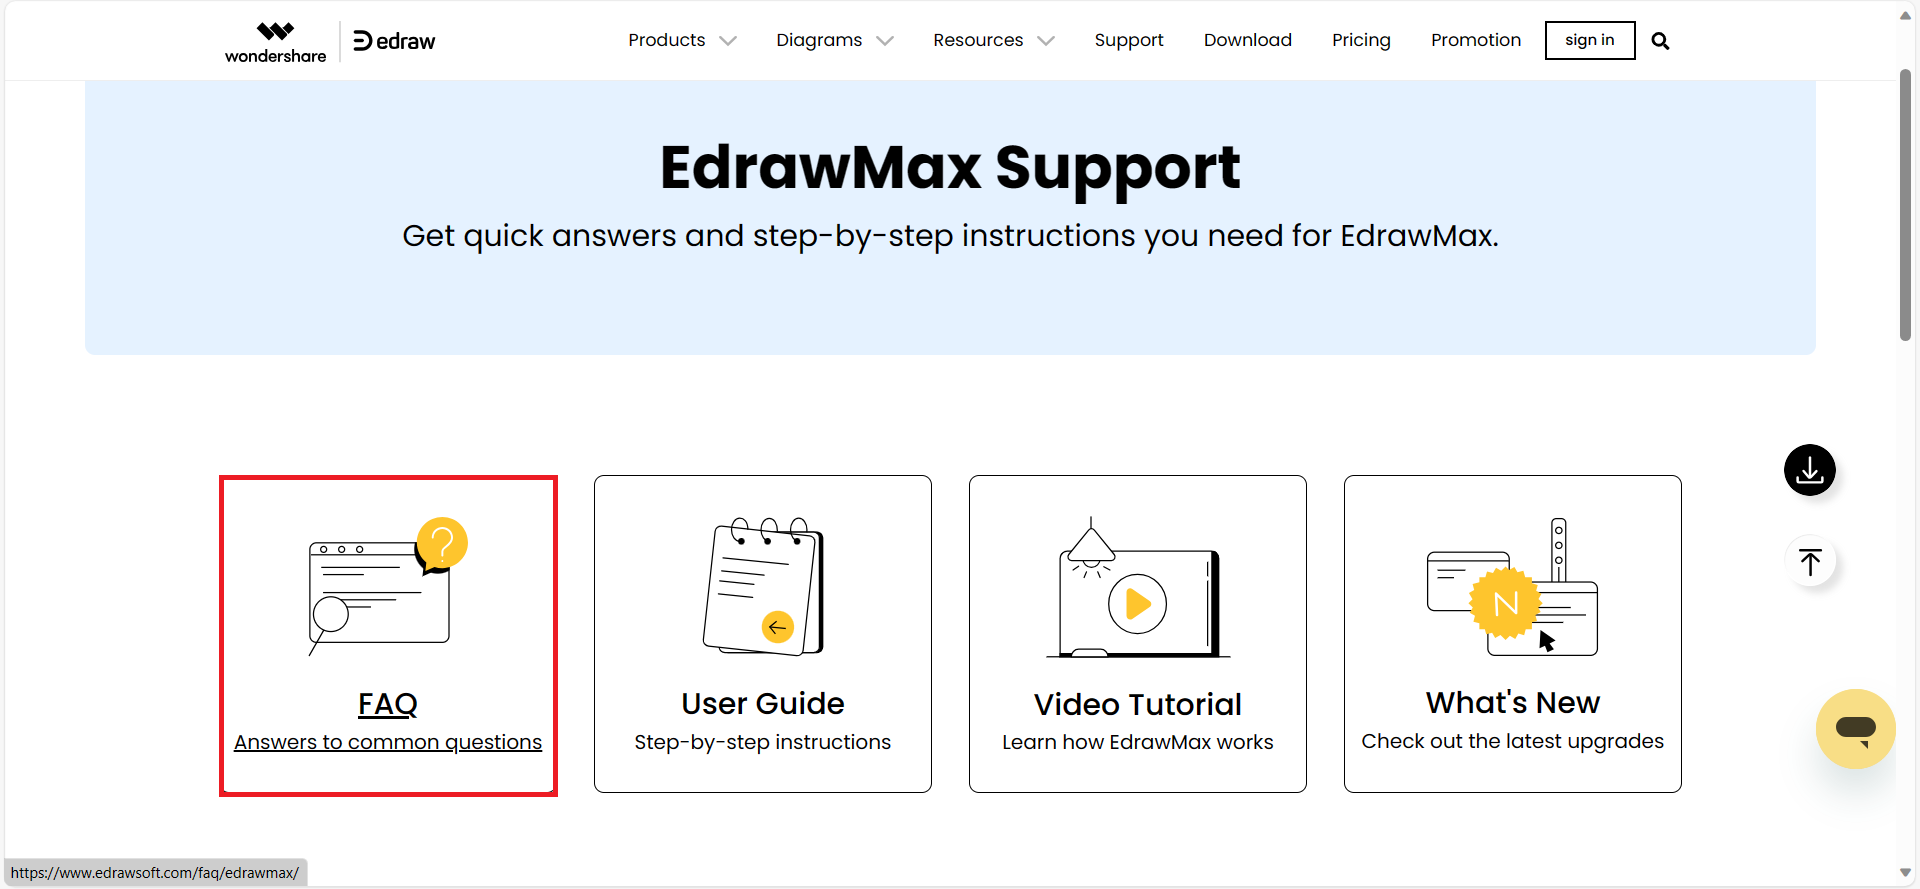 edrawmax support faq section